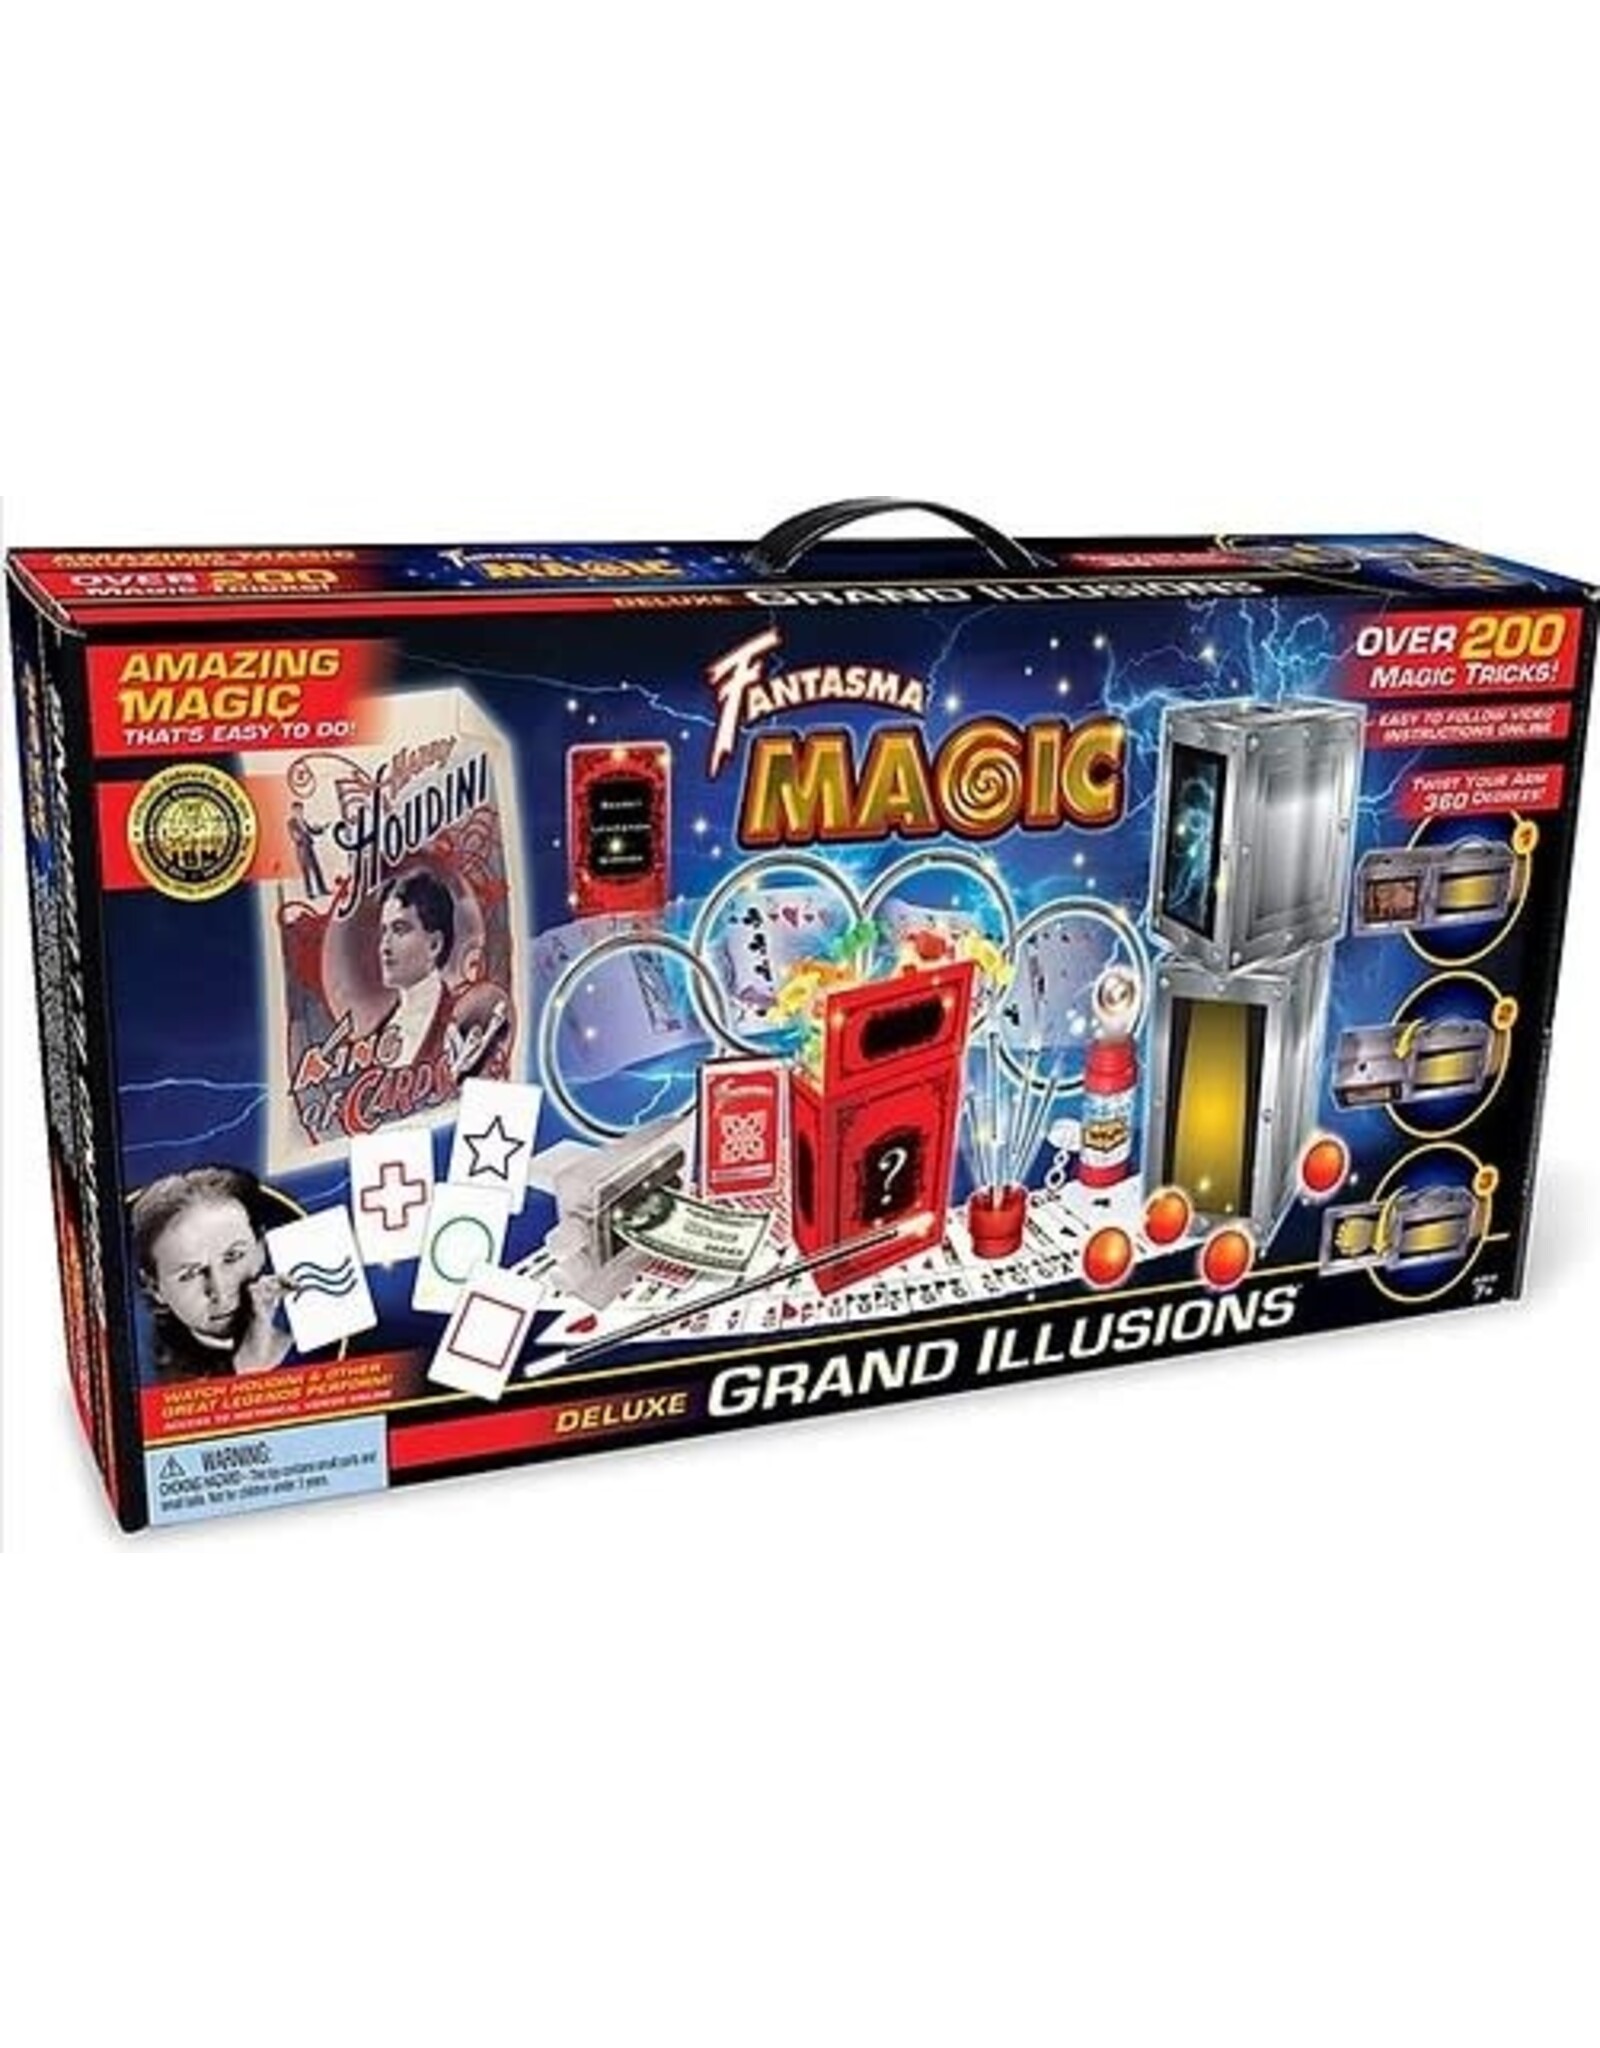 Fantasma Toys Deluxe Grand Illusions